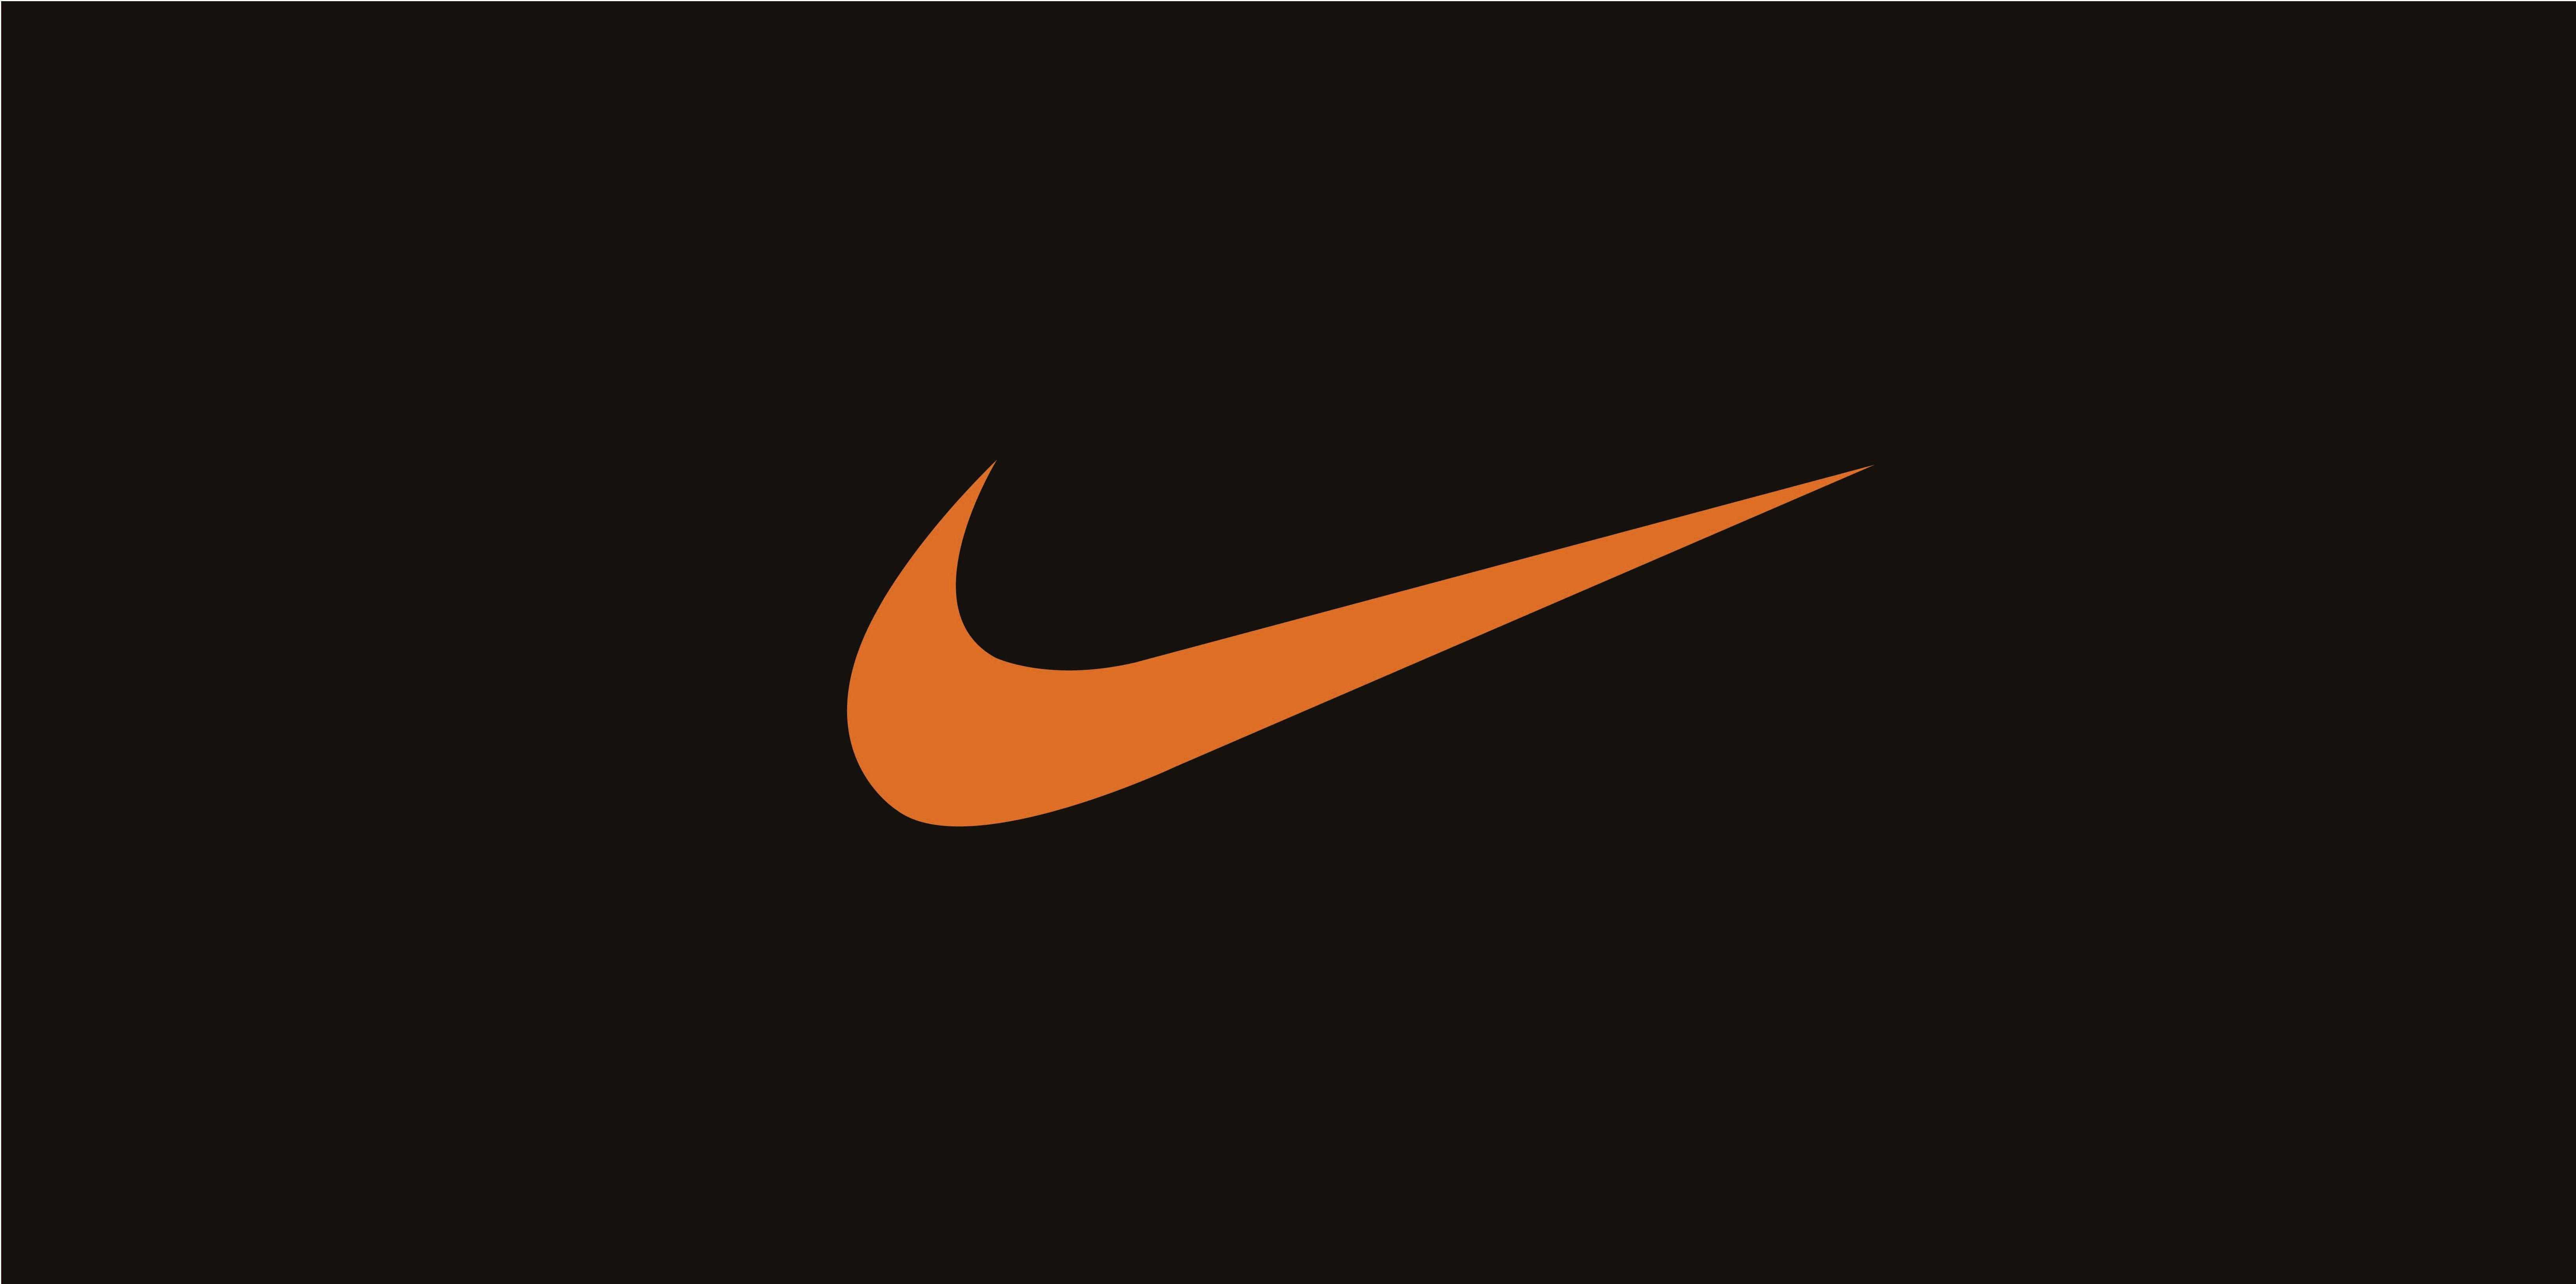 Red Nike Logo - Nike Logo Wallpapers HD free download | PixelsTalk.Net